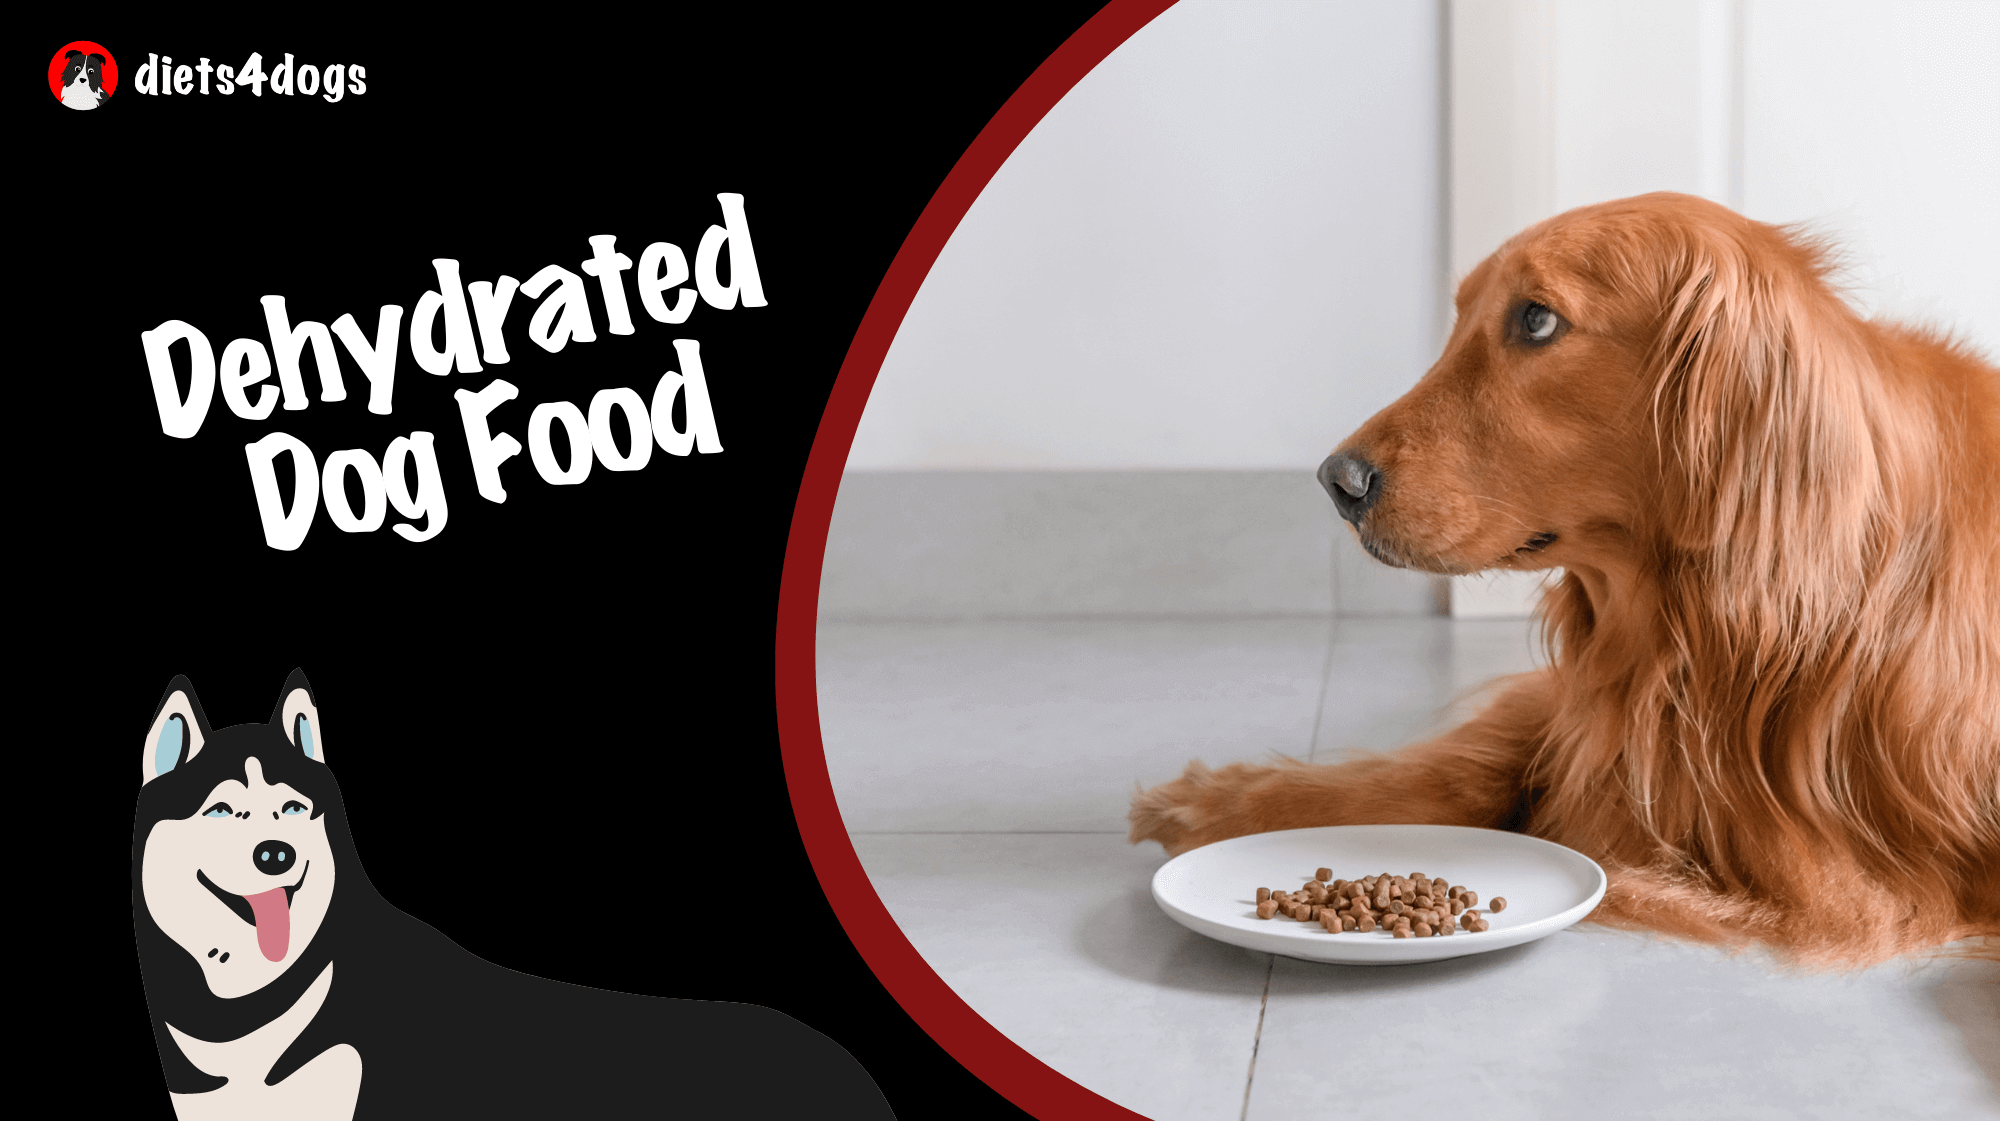 Dehydrated Dog Food